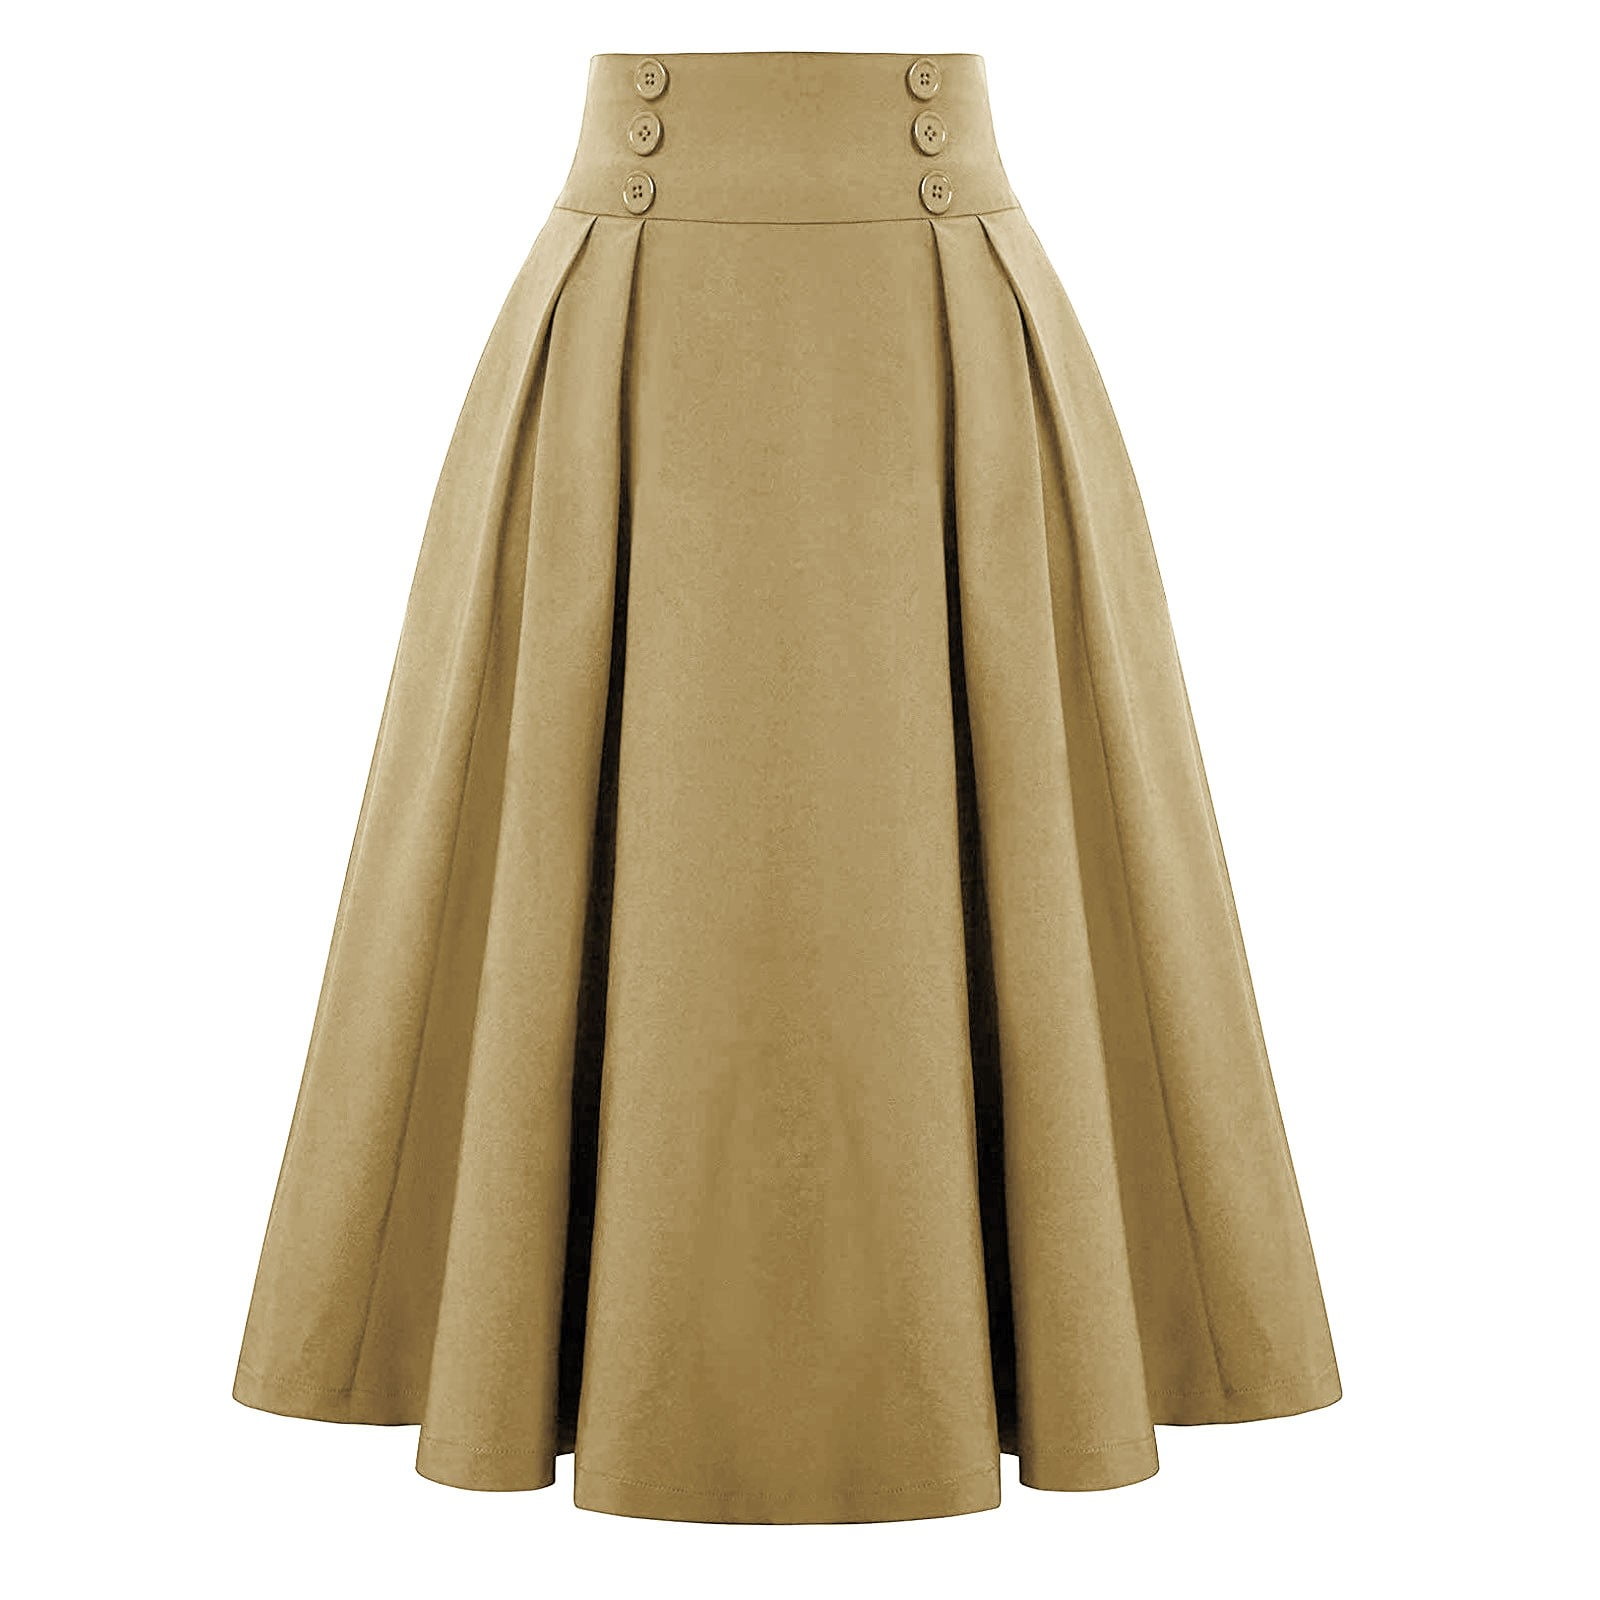 JNGSA Women Plaid Skirt Vintage High Waist Pleated Skirt Solid Color ...